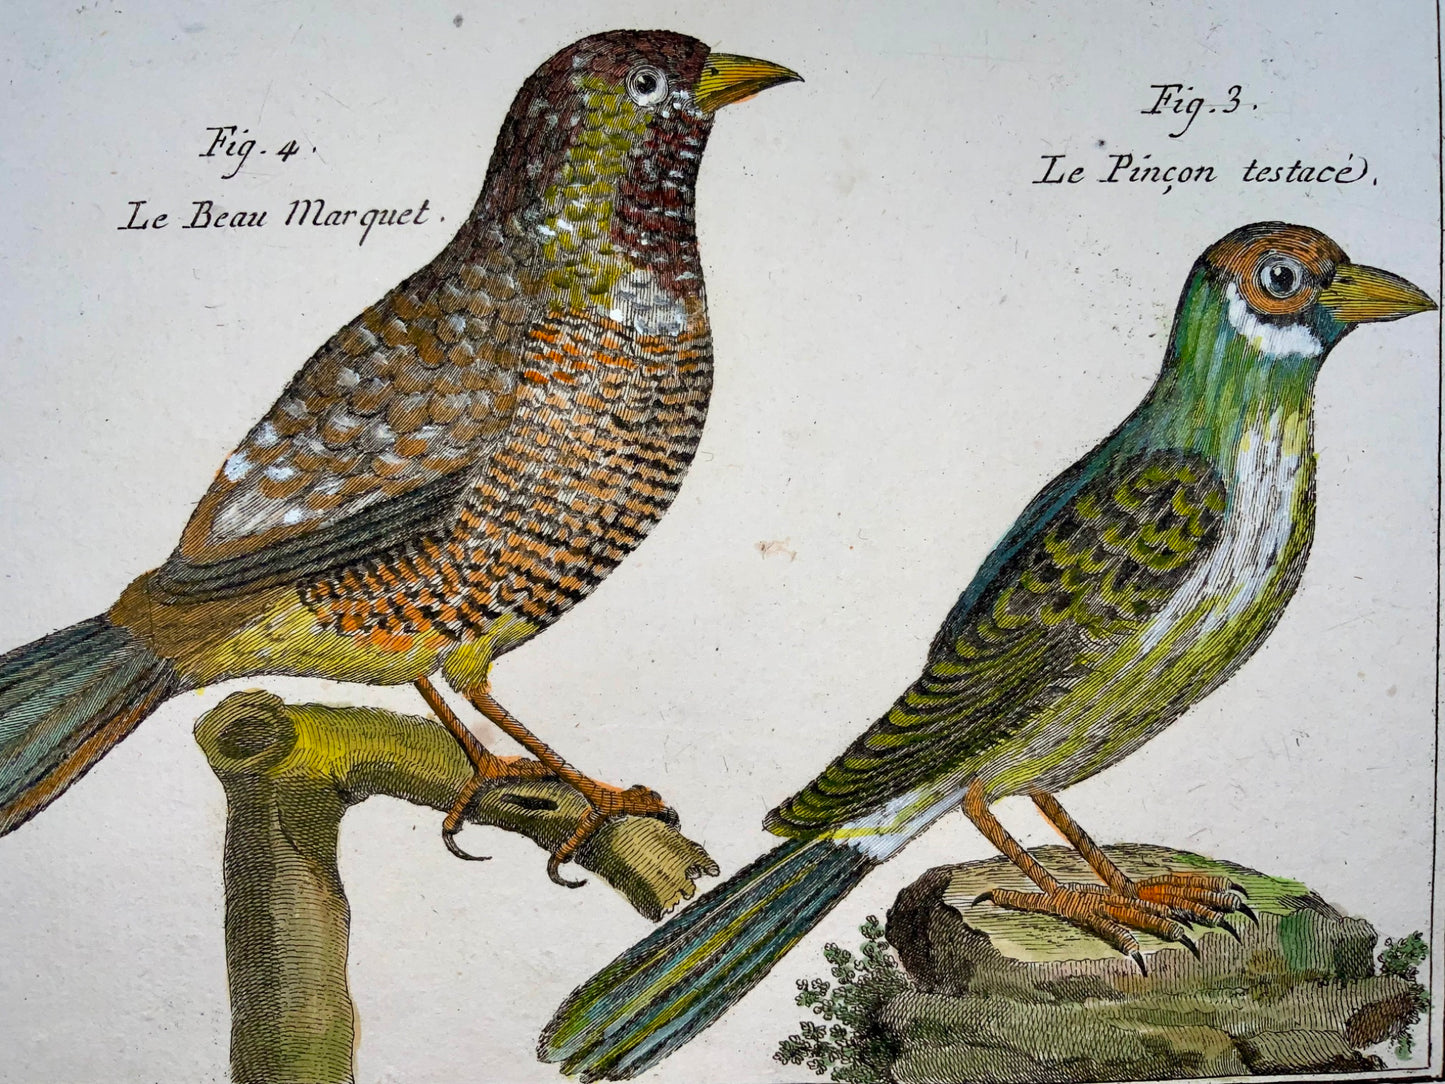 1789 Chaffinch, Benard sc. quarto, hand colour, engraving, ornithology